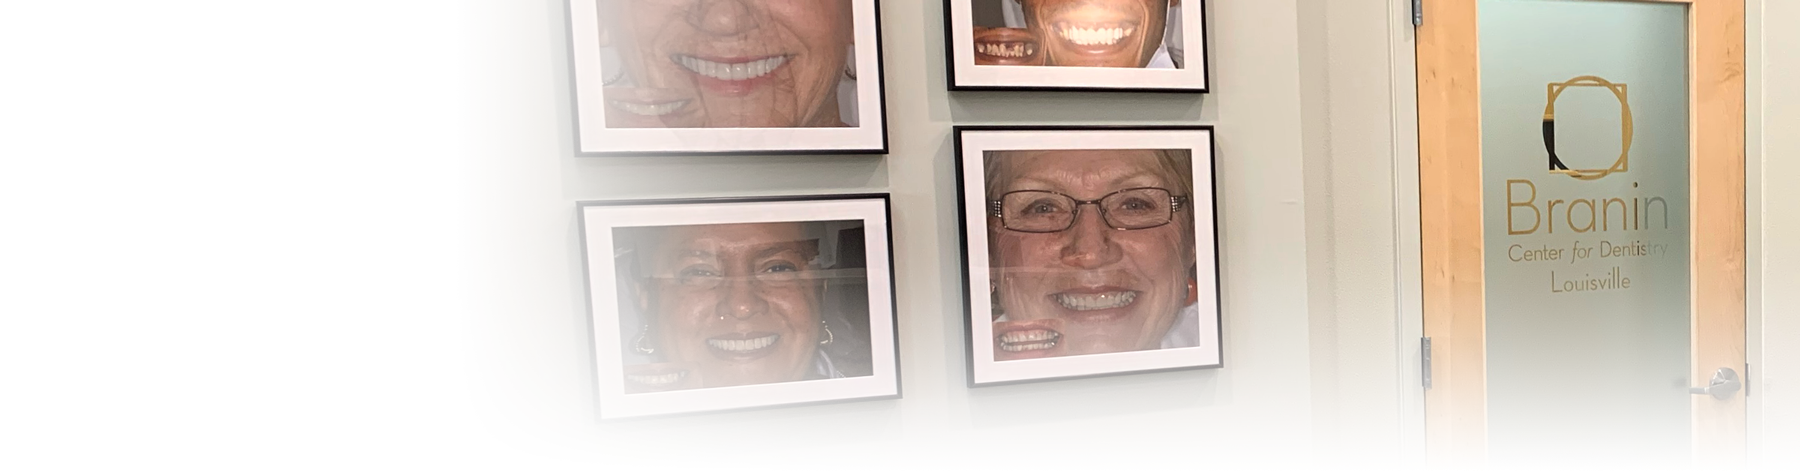 A wall full of framed photos